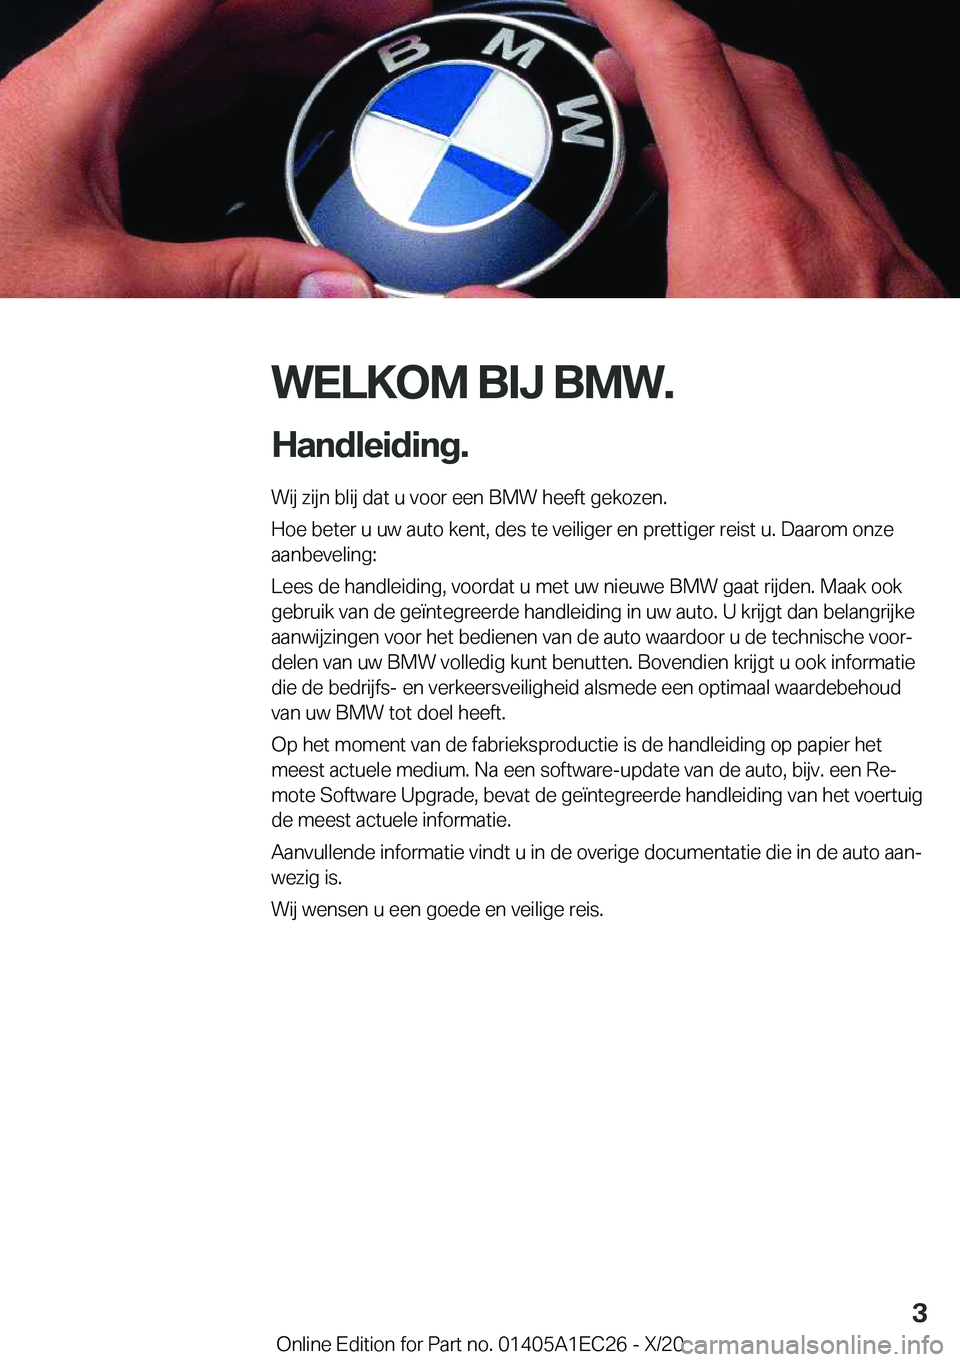 BMW 8 SERIES GRAN COUPE 2021  Instructieboekjes (in Dutch) �W�E�L�K�O�M��B�I�J��B�M�W�.
�H�a�n�d�l�e�i�d�i�n�g�. �W�i�j��z�i�j�n��b�l�i�j��d�a�t��u��v�o�o�r��e�e�n��B�M�W��h�e�e�f�t��g�e�k�o�z�e�n�.
�H�o�e��b�e�t�e�r��u��u�w��a�u�t�o��k�e�n�t�